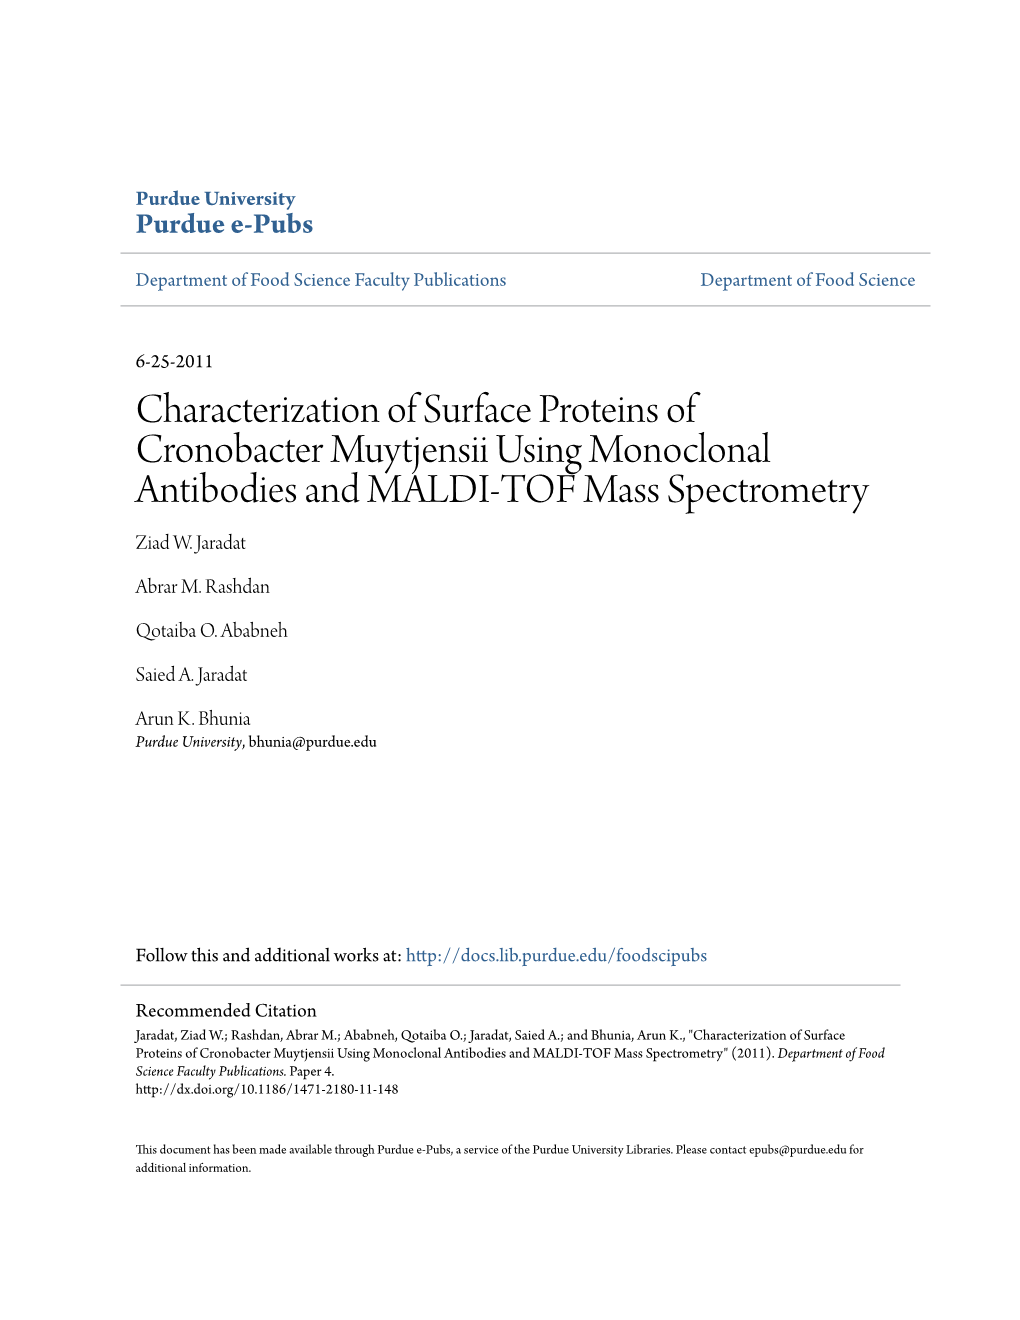 Characterization of Surface Proteins of Cronobacter Muytjensii Using Monoclonal Antibodies and MALDI-TOF Mass Spectrometry Ziad W